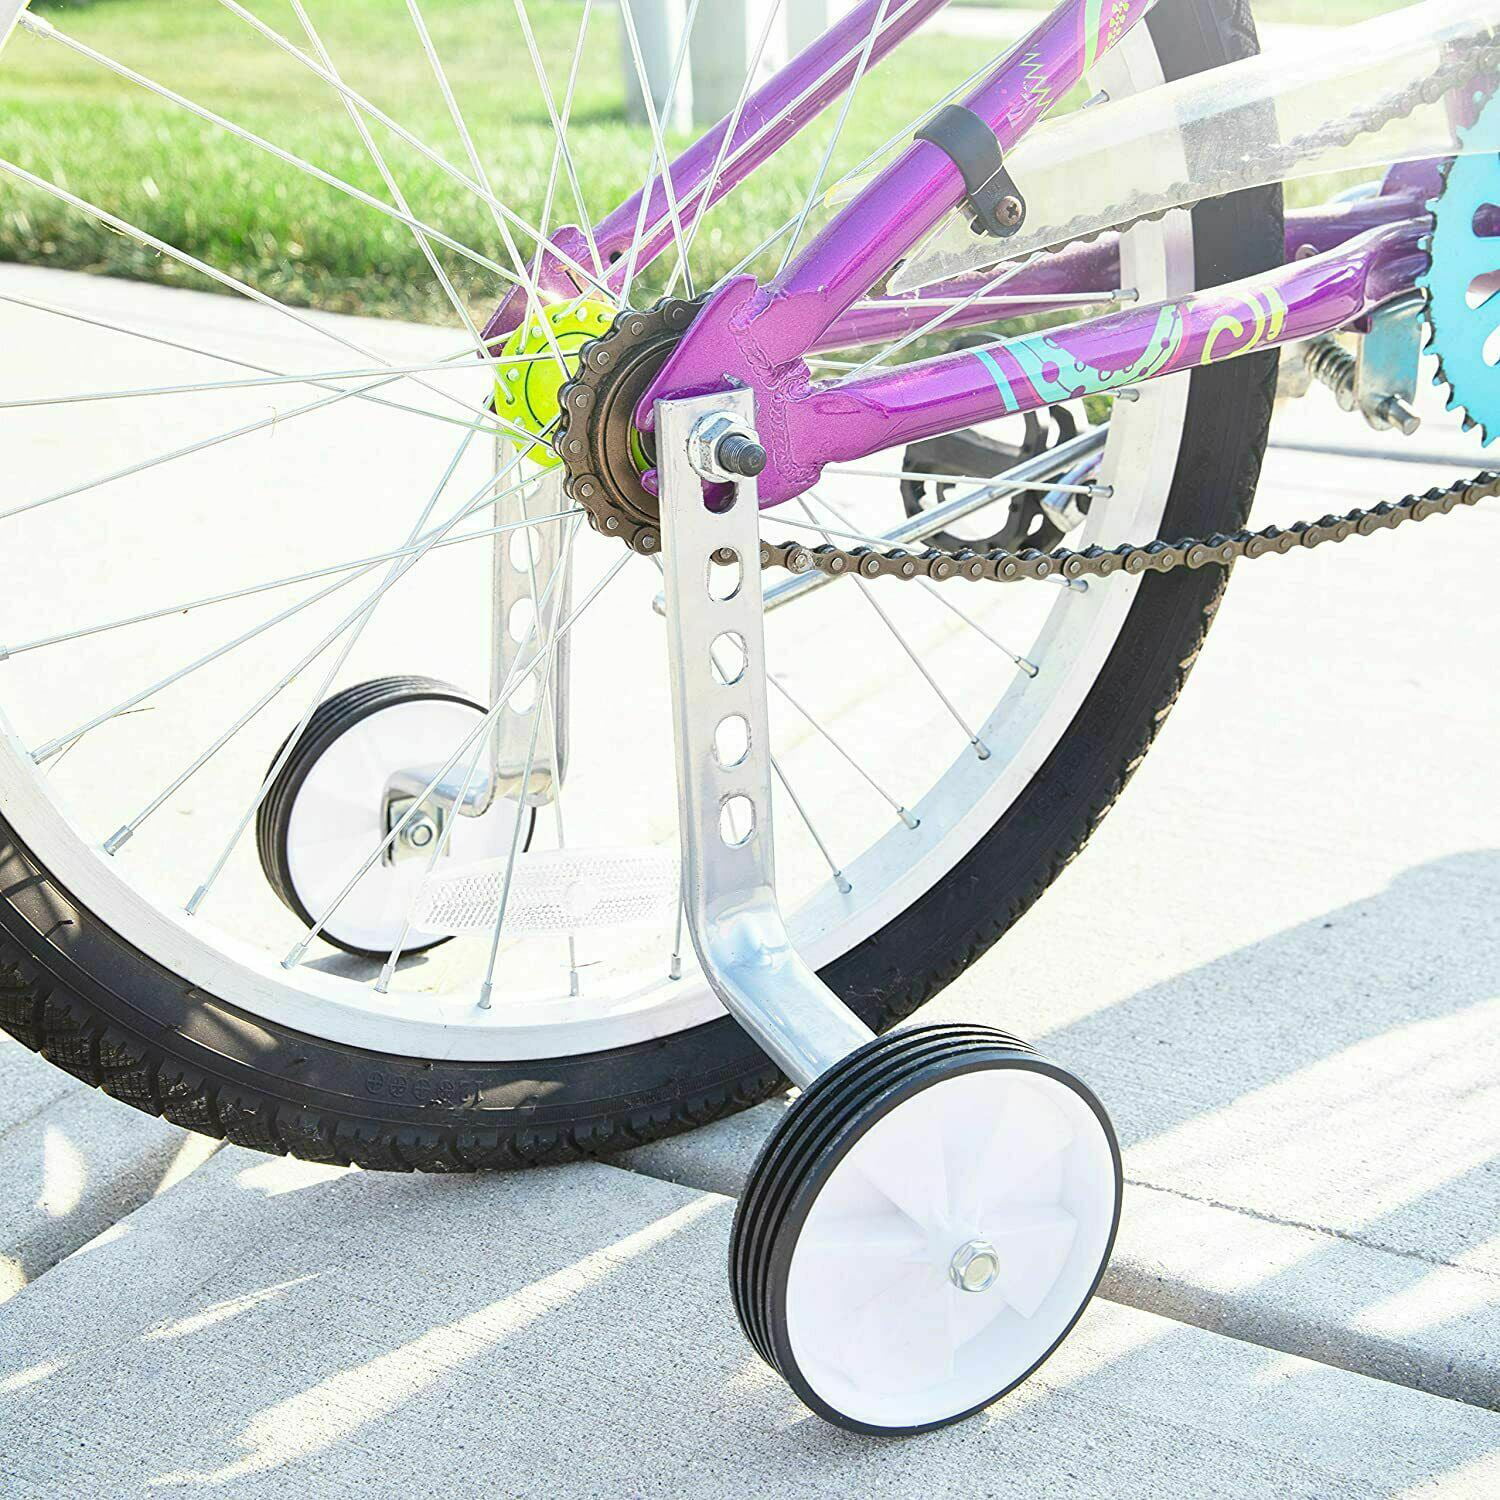 16-24'' Kids Bicycle Training Wheels Heavy Duty Rear Stabilizers & Mounted Kit 